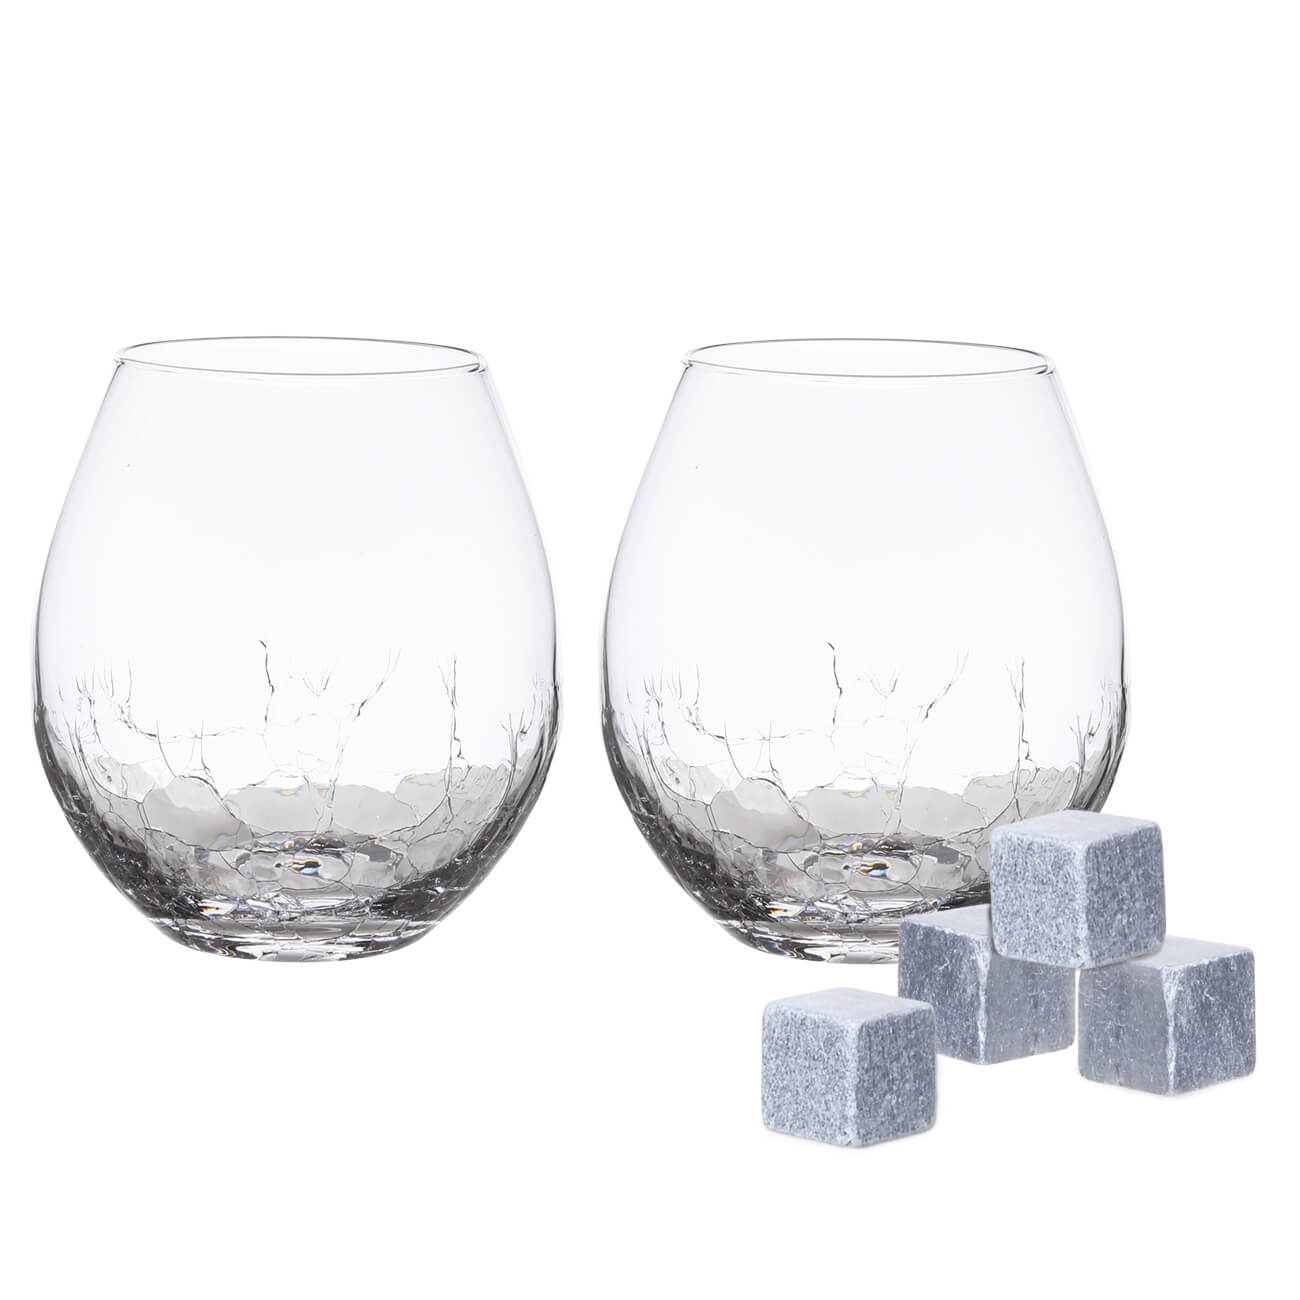 Набор для виски, 2 перс, 6 пр, стаканы/кубики, стекло/стеатит, Кракелюр, Ice набор для виски 1 перс 4 пр стакан кубики стекло р мрамор mosaic